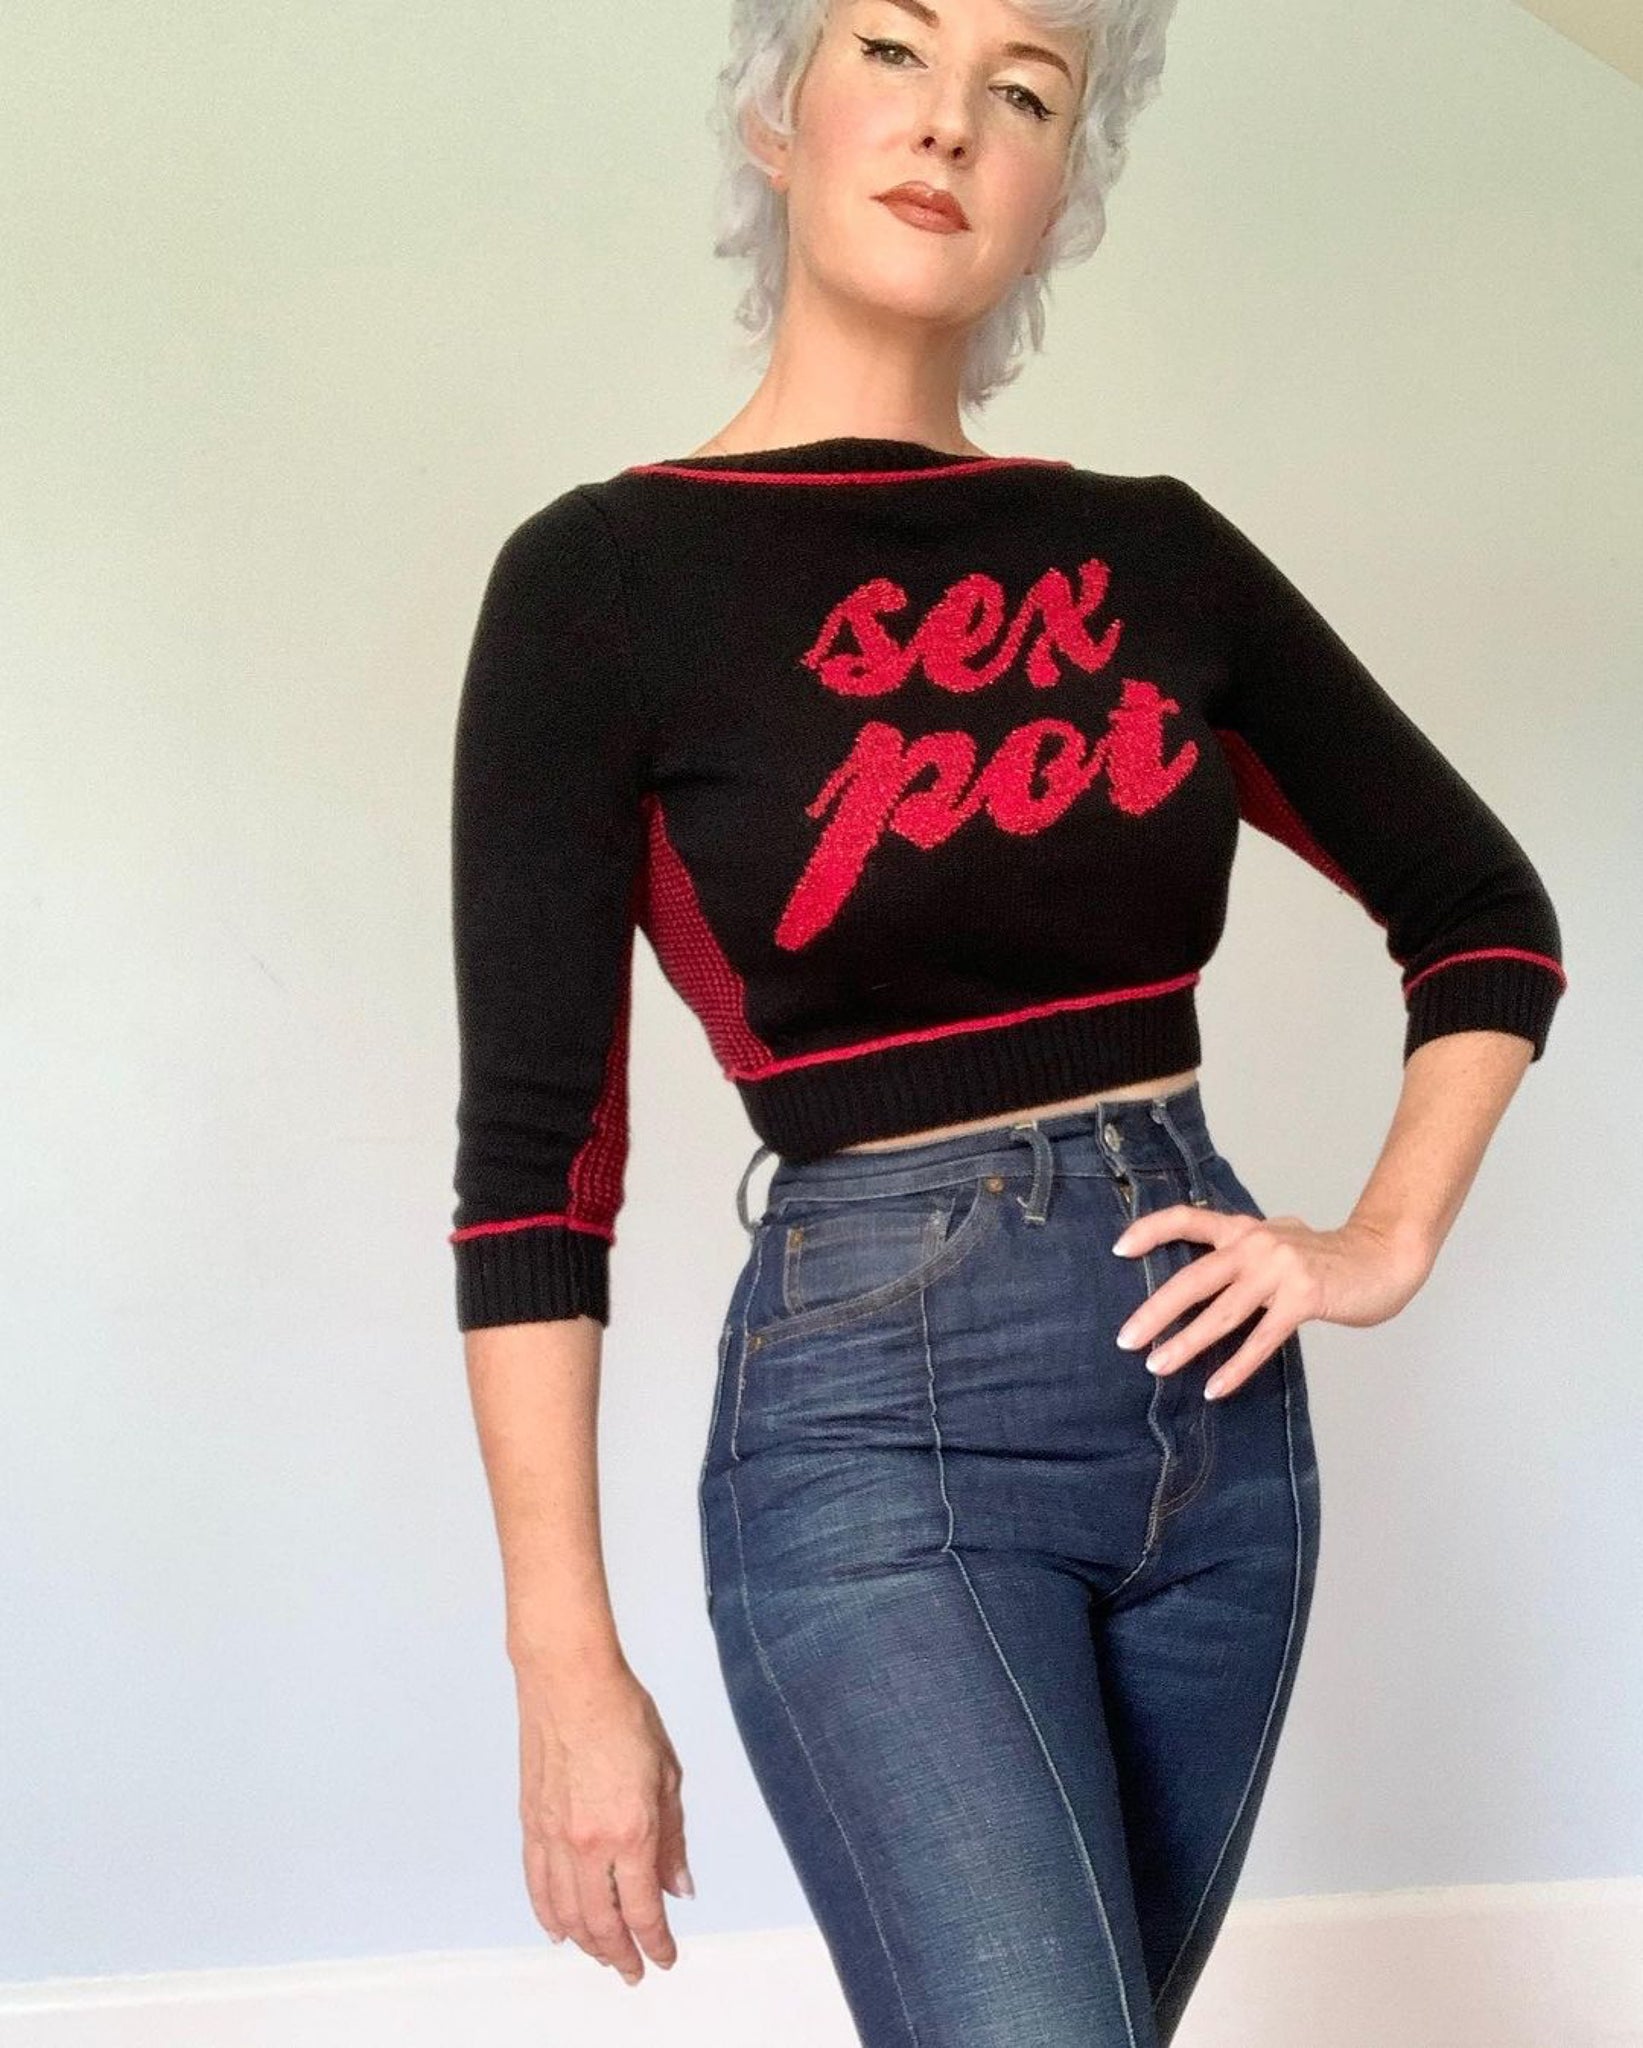 Rare “Betsey Johnson” Sex Pot Sweater